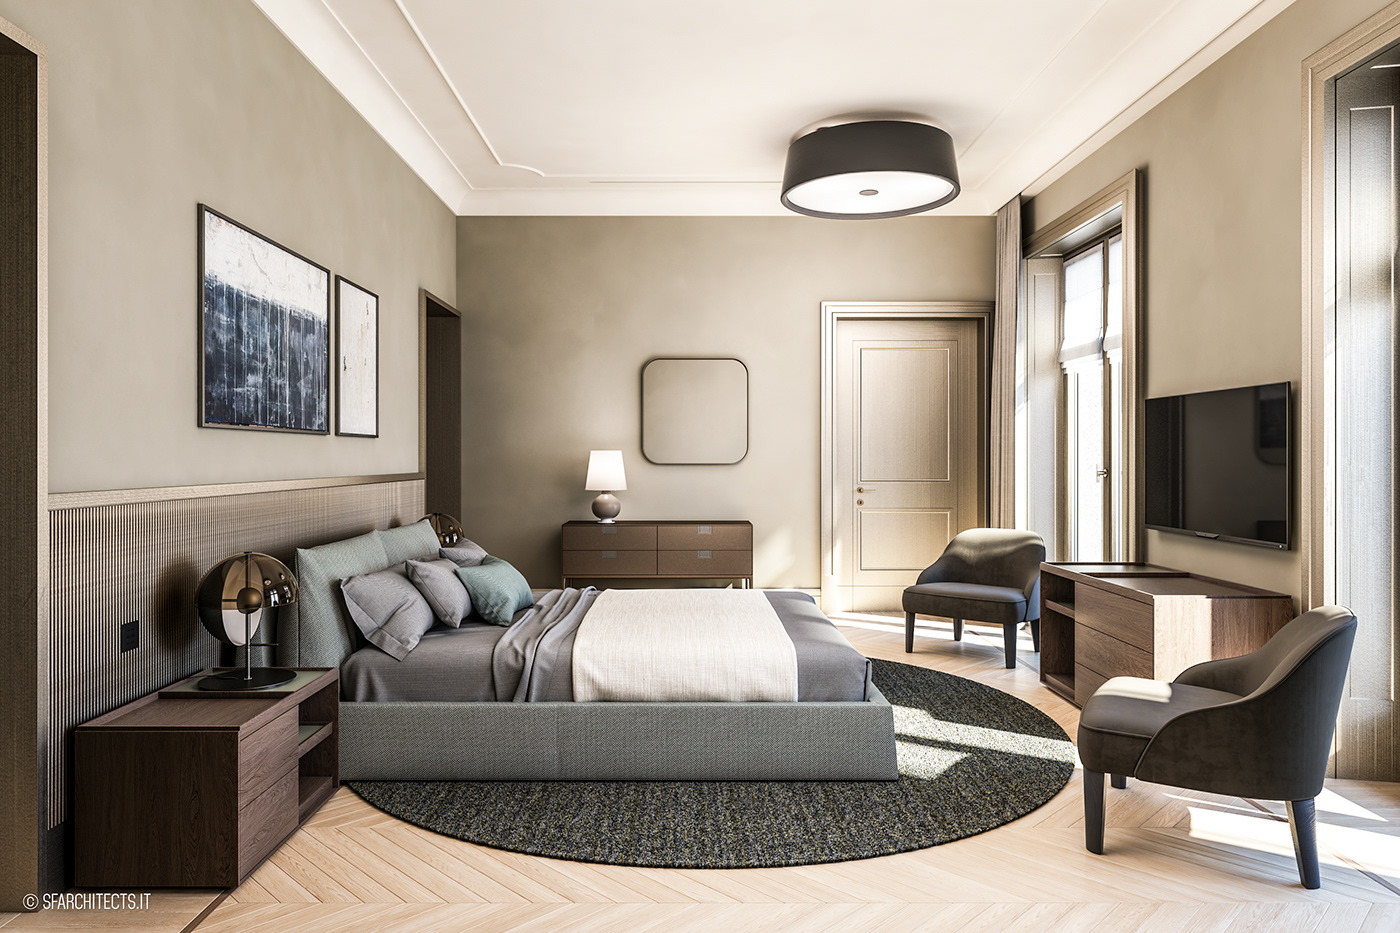 3dvisualization architecture archviz cgarchitects interiordesign Render CGI luxury realestate Villa